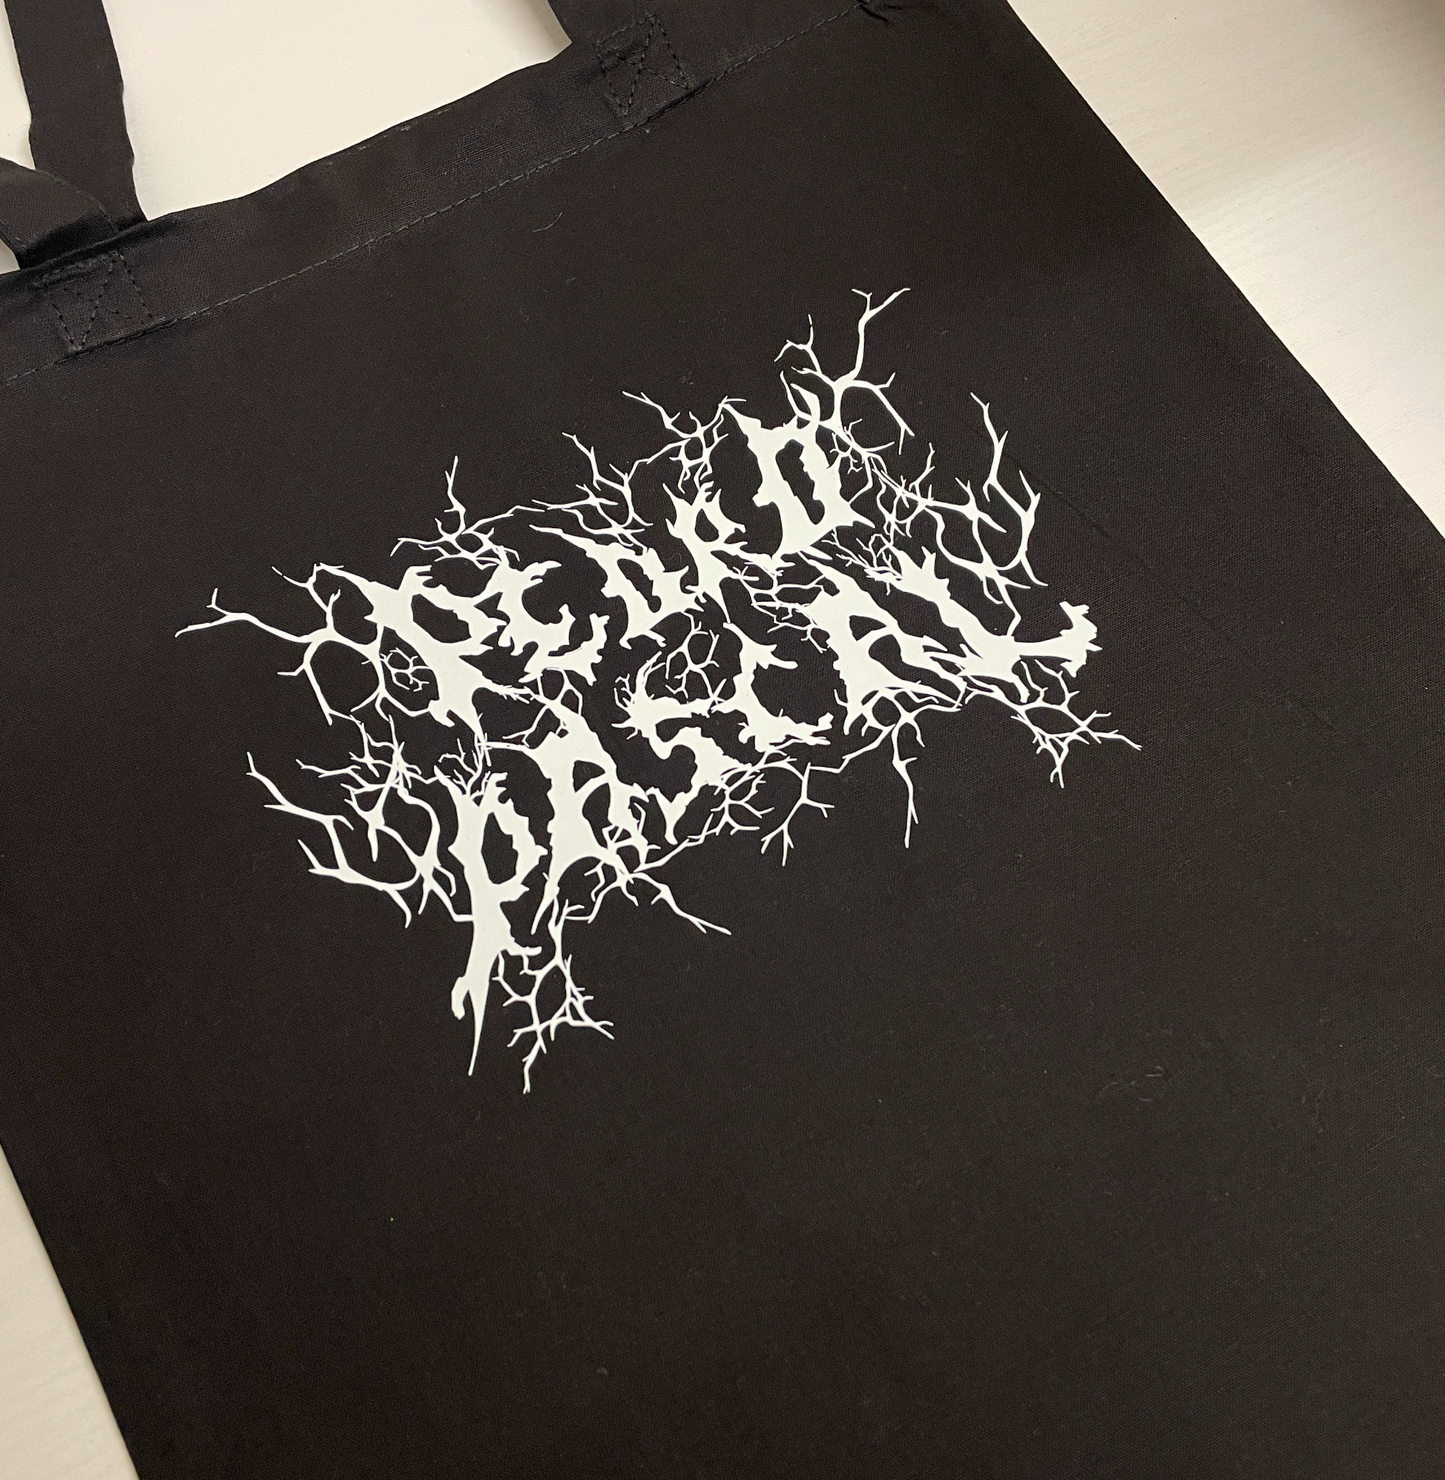 Pedro Pascal Metalcore Black 100% Cotton Tote Bag 2 Colours available